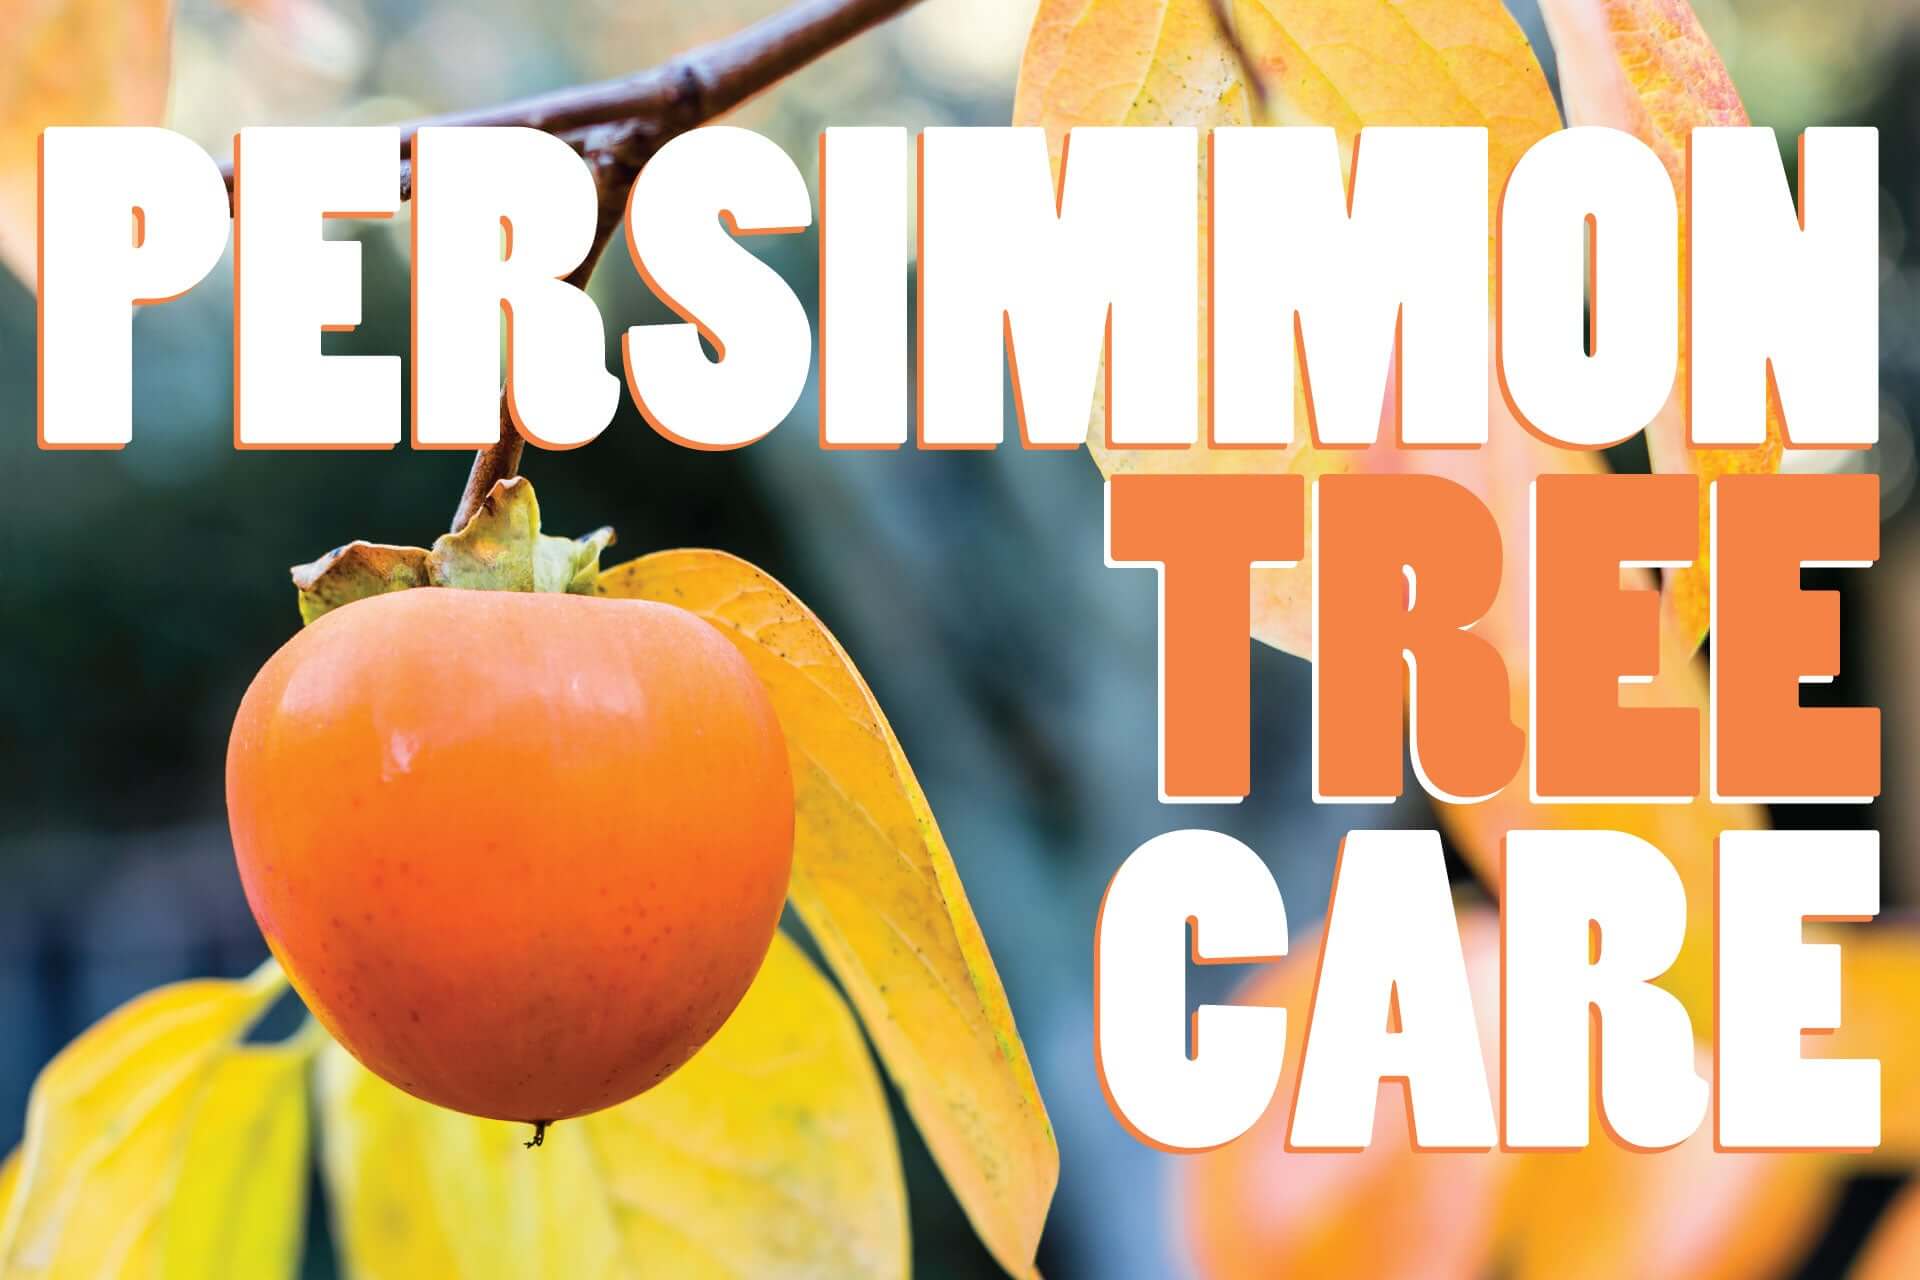 Persimmon Tree Care!